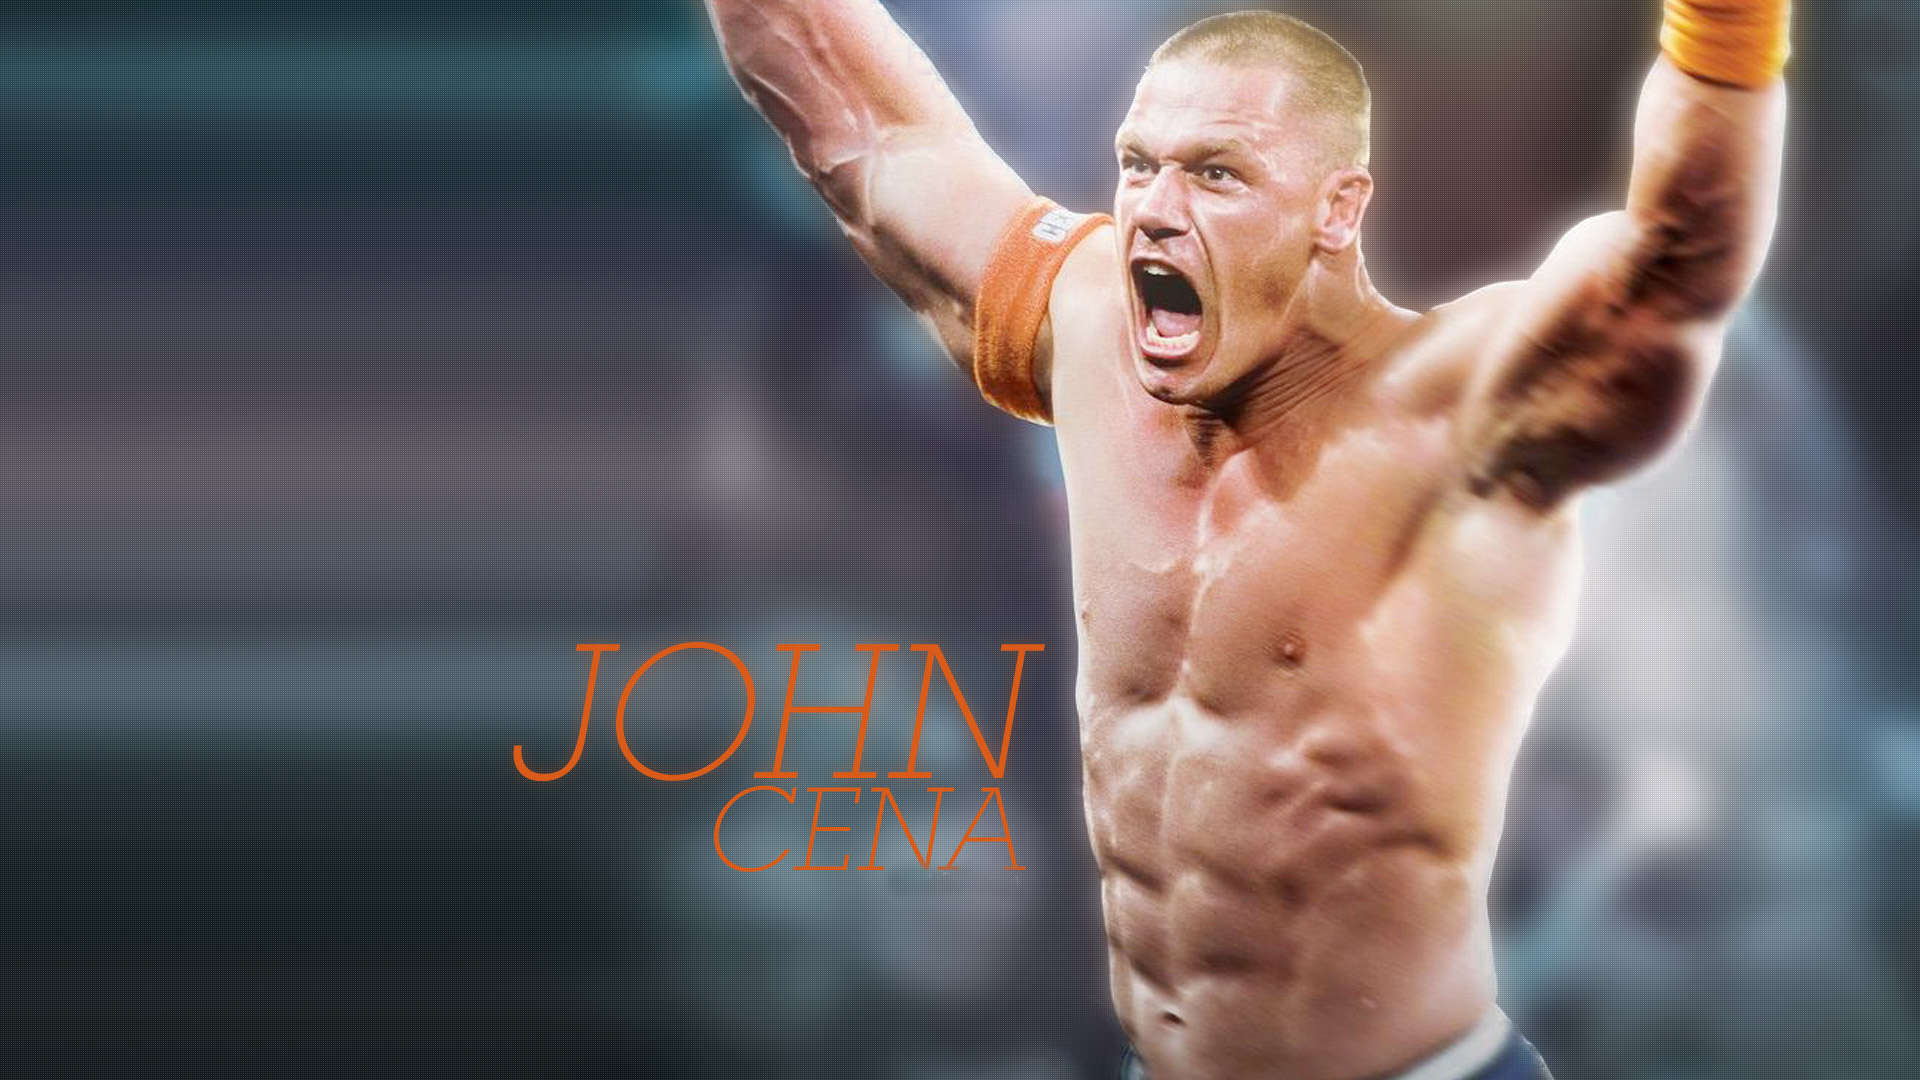 John Cena Wallpaper HD. Wallpaper, Background, Image, Art Photo